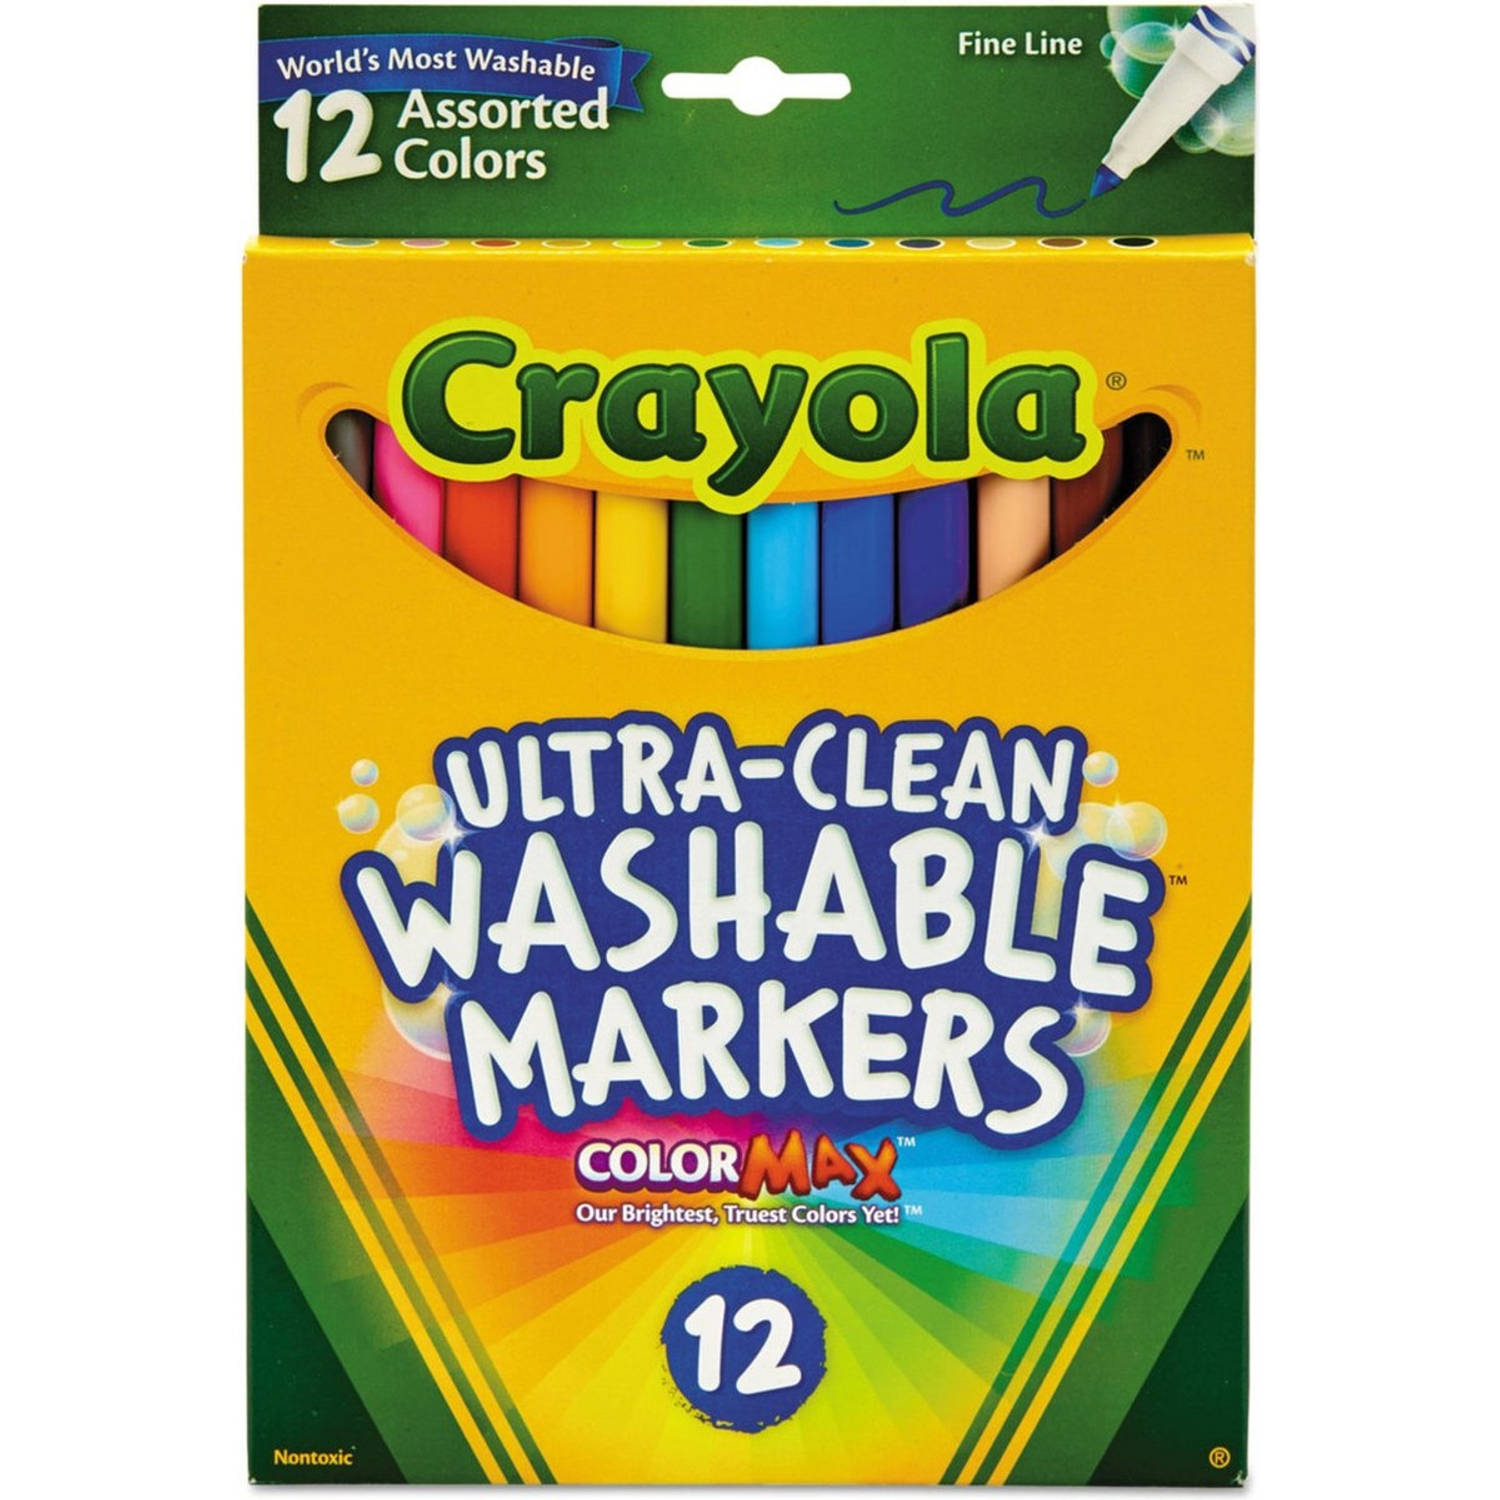 Crayola Ultra-clean Washable Markers - 12 stuks Color max met fijne punt